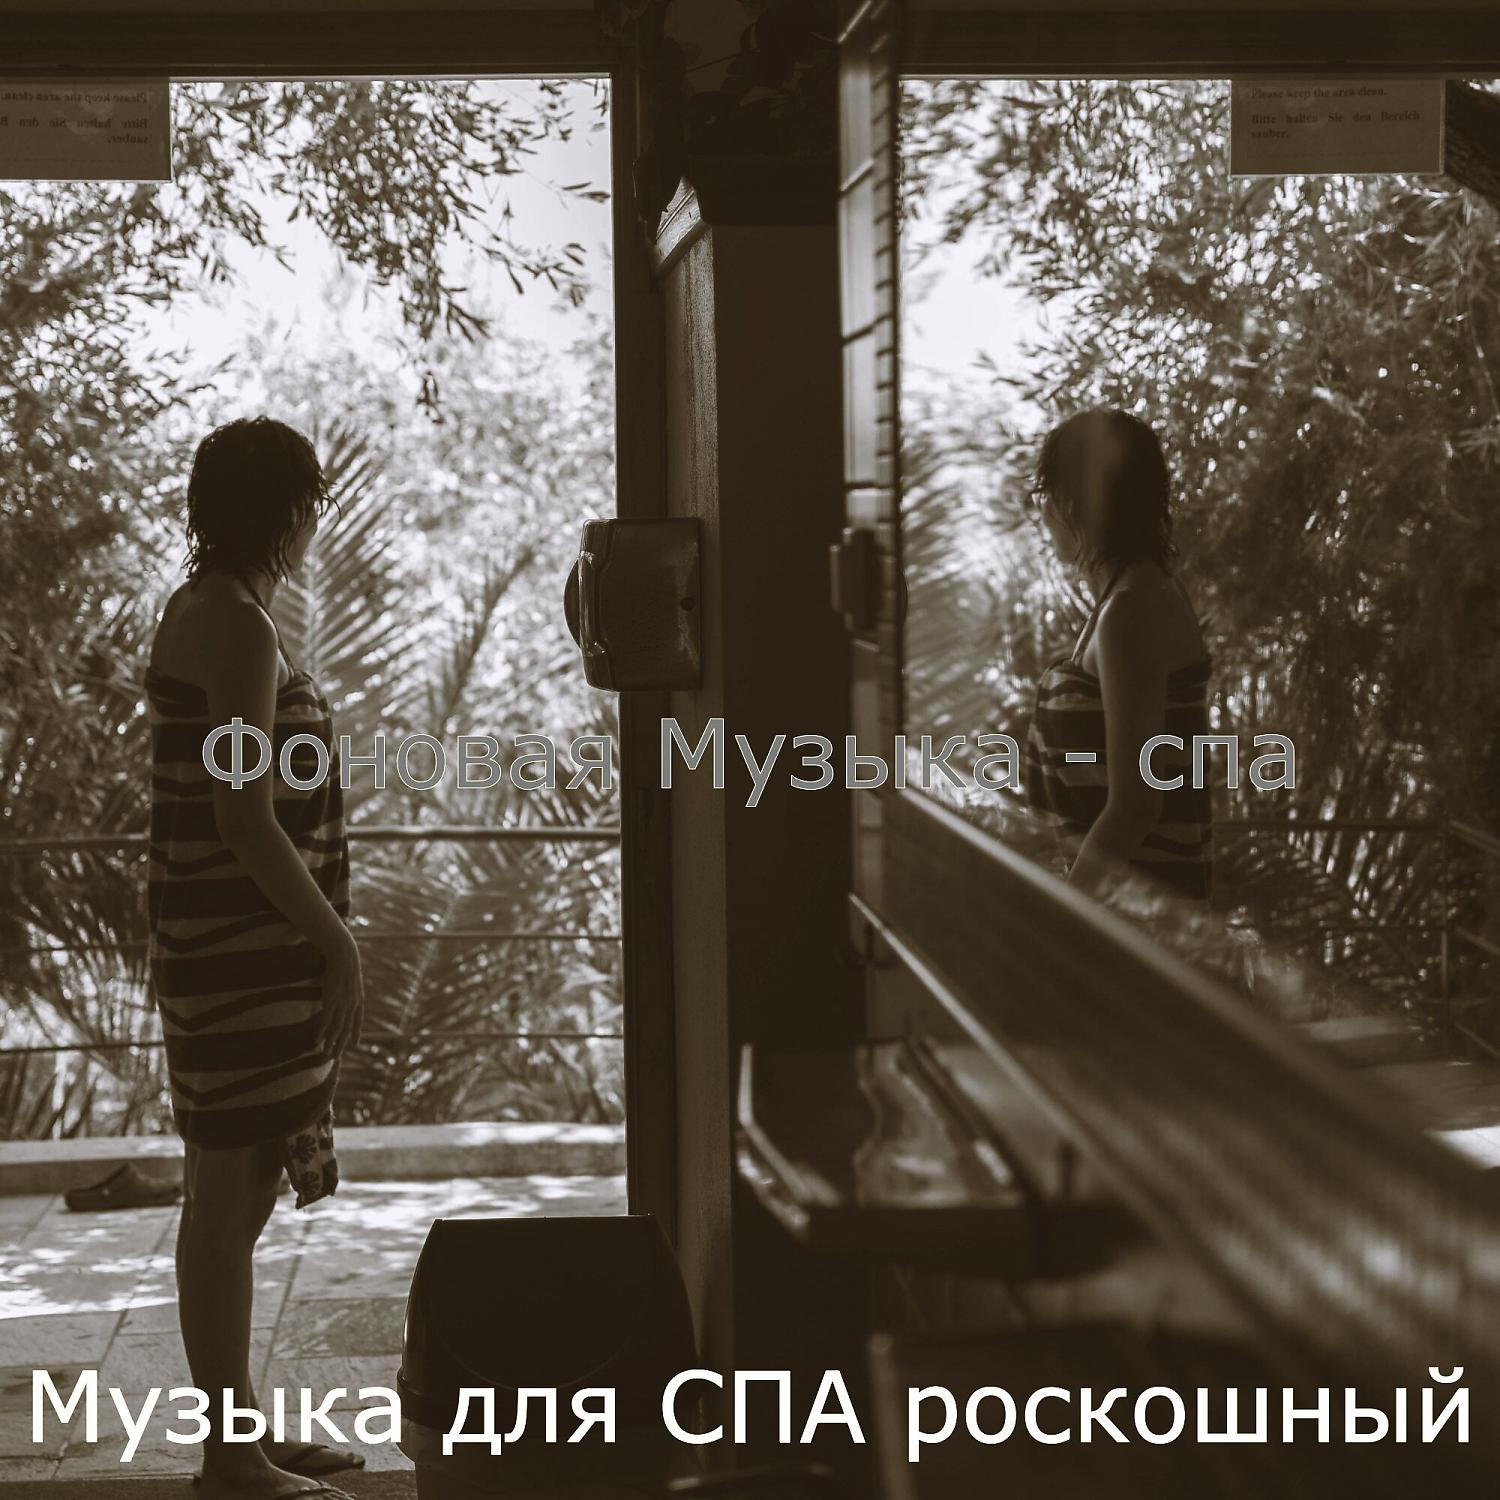 Постер альбома Фоновая Музыка - спа